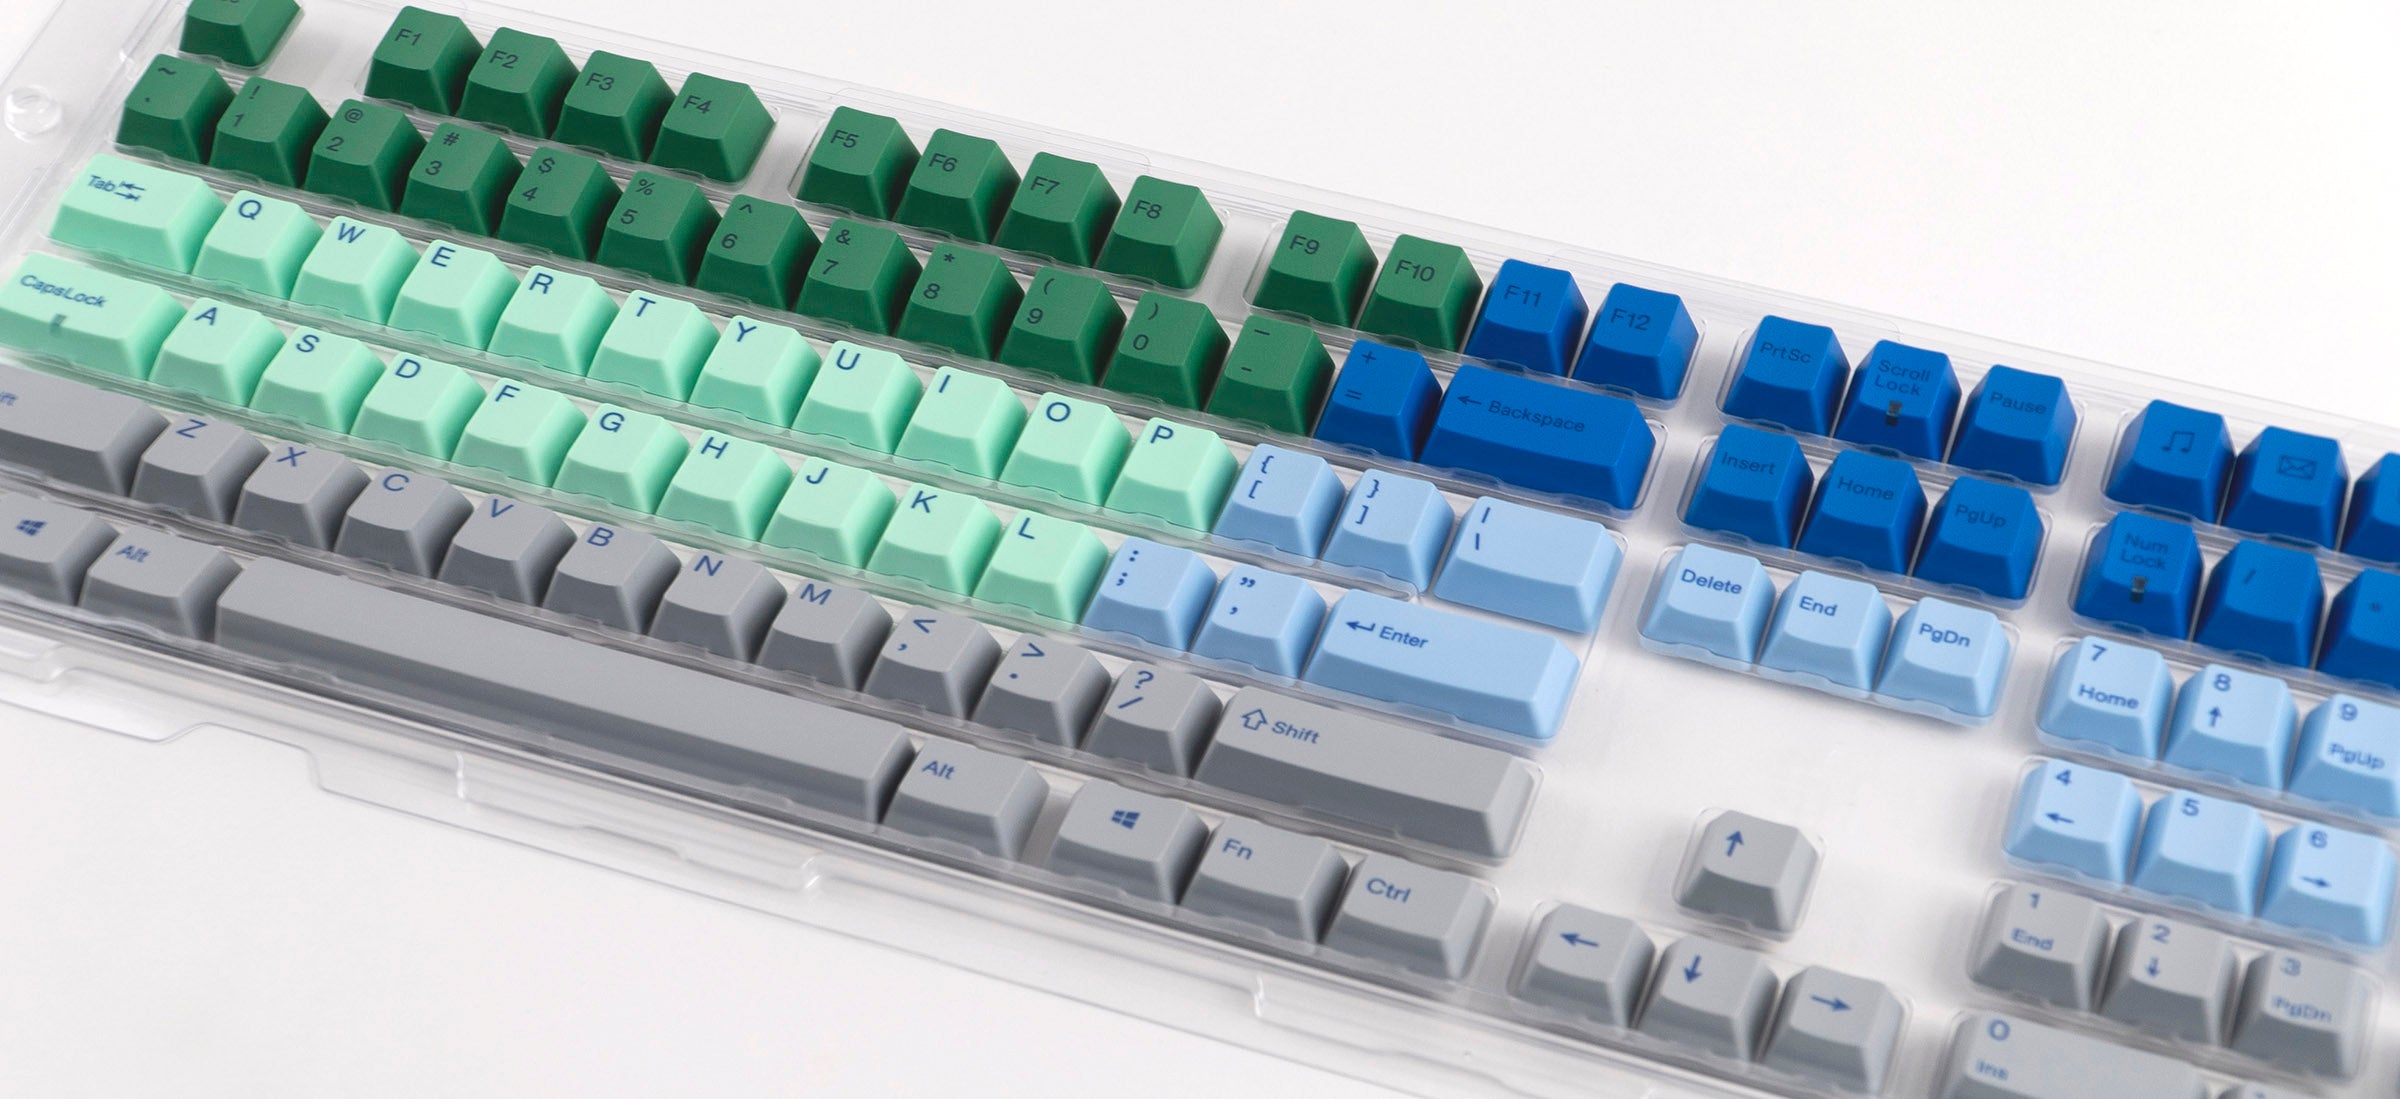 Varmilo 108-Key Dye Sub PBT Keycap Set Blue, Green, and Grey Rivulet MKXB1JB7CX |34112|